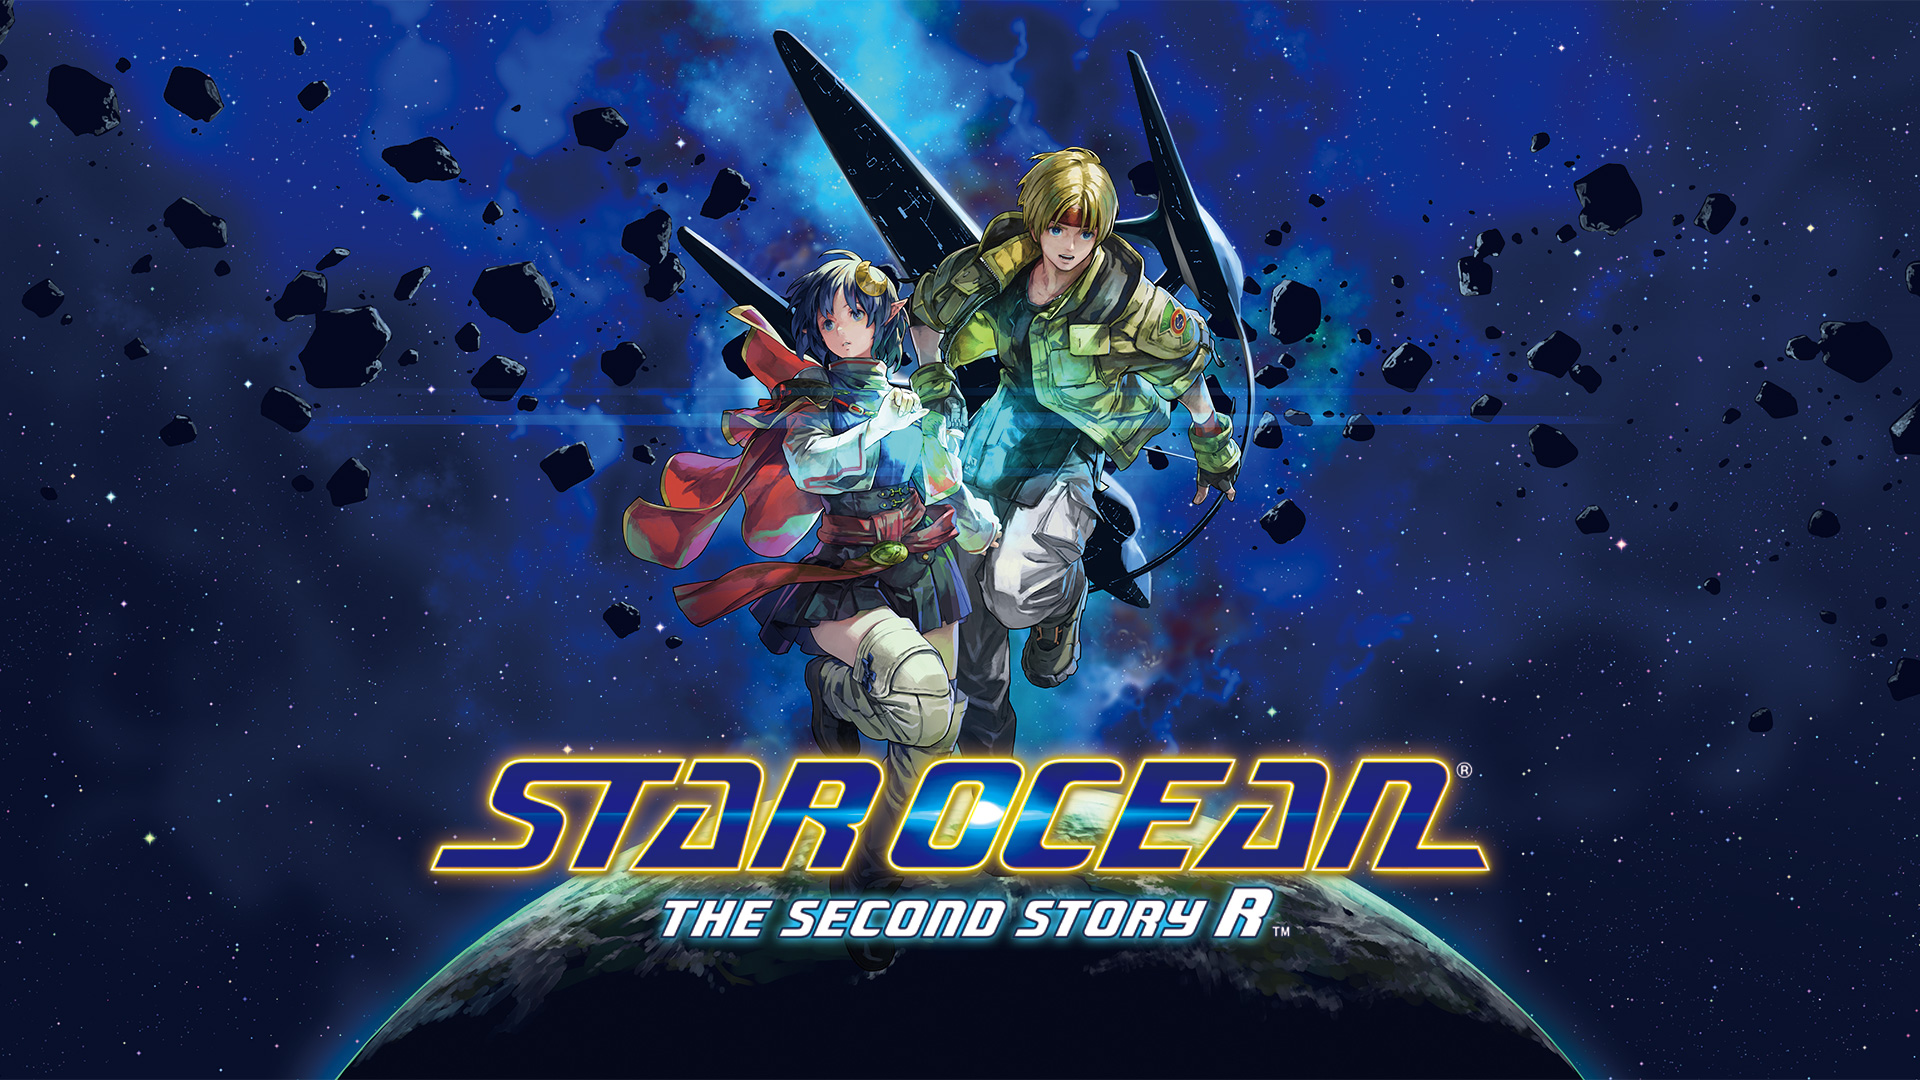 Star ocean the second story r keyart